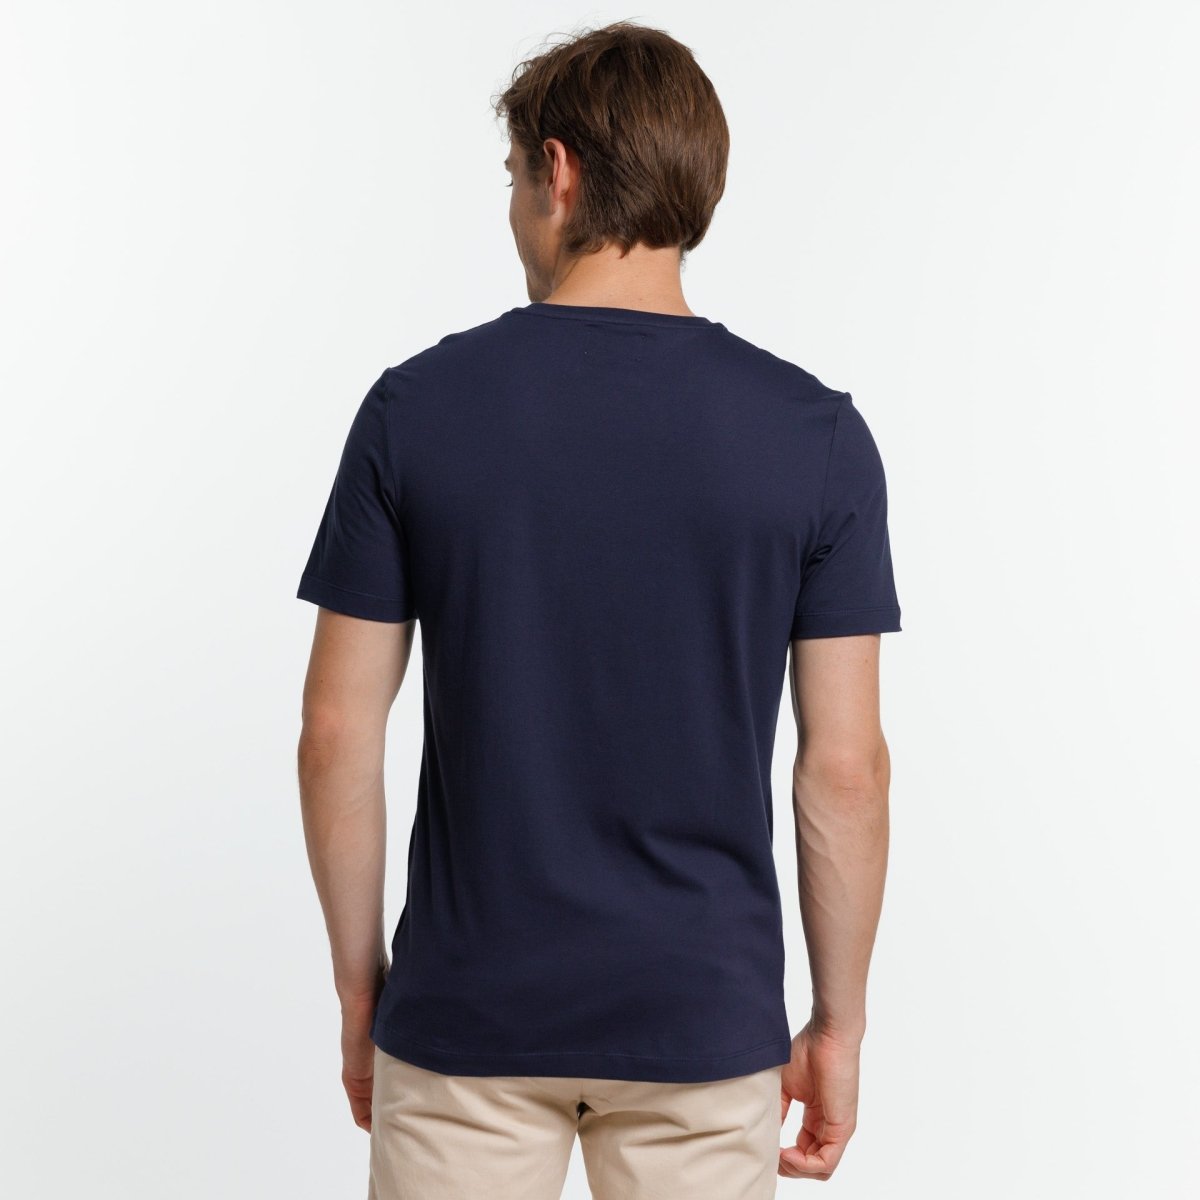 Travis Navy T-Shirt